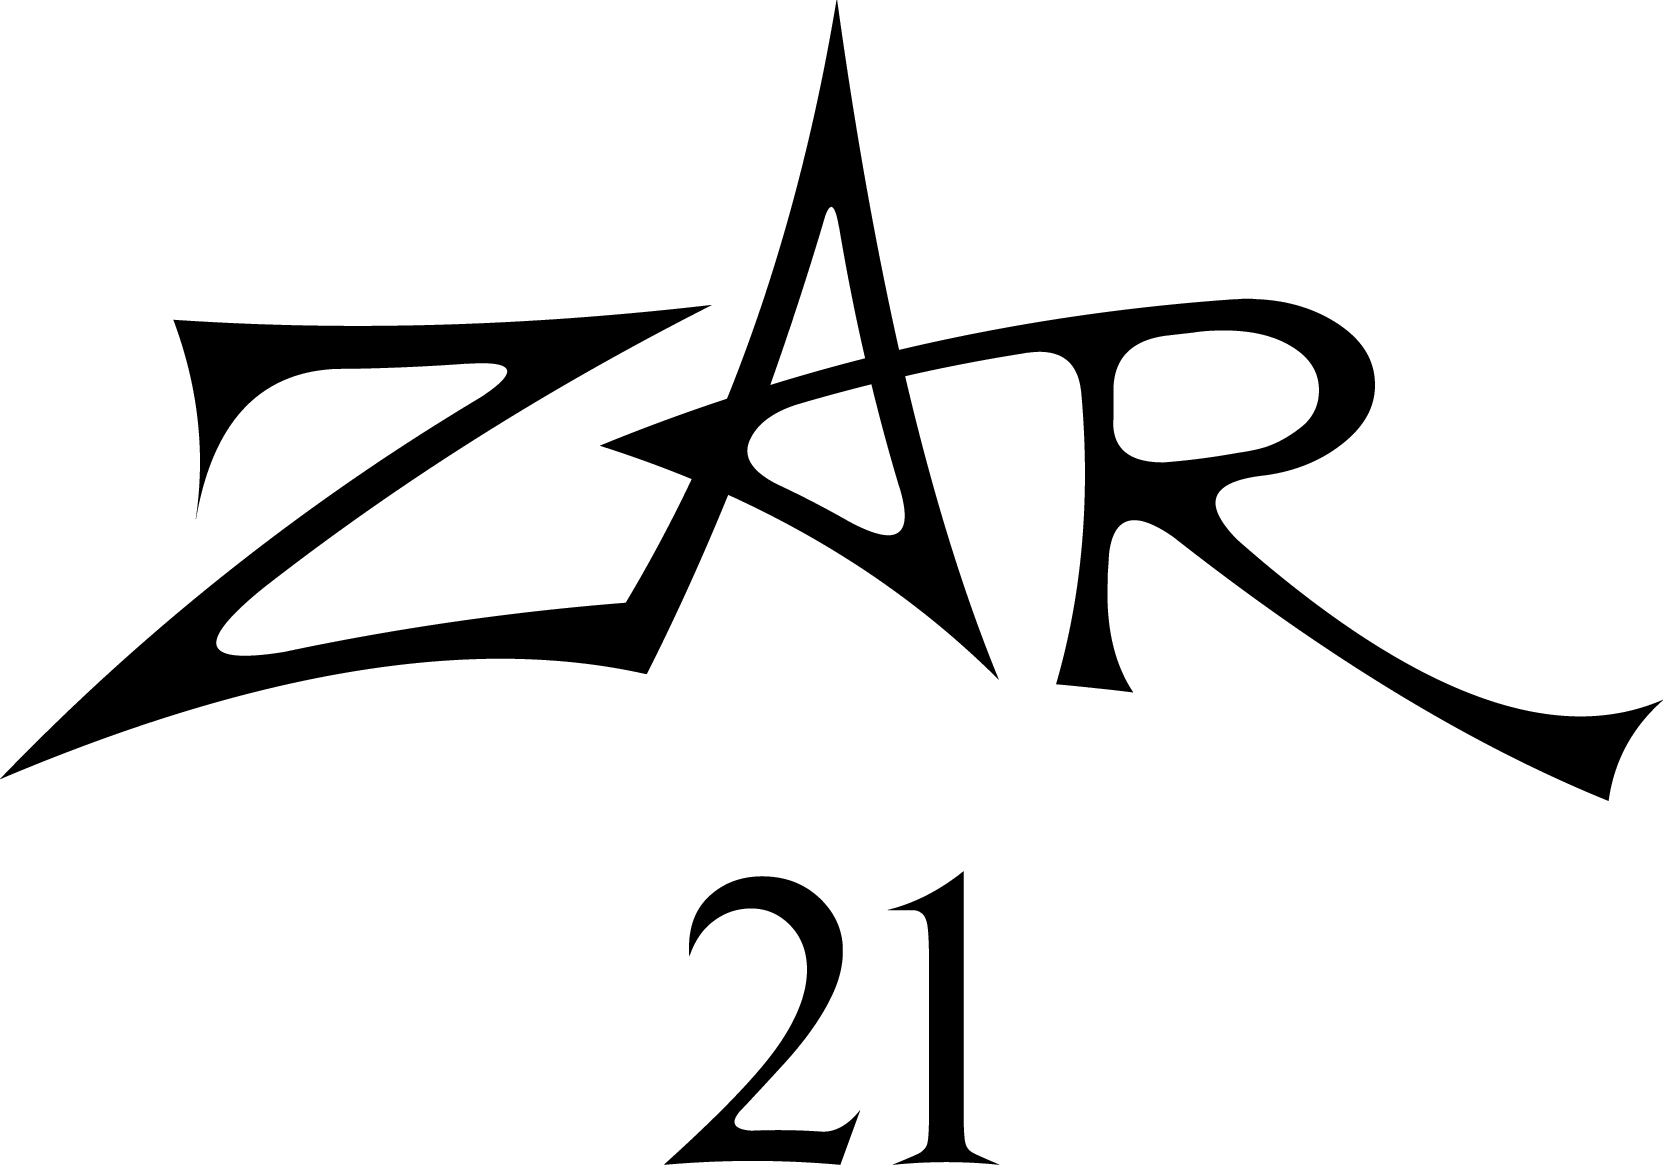 Zar21 - Logo.png